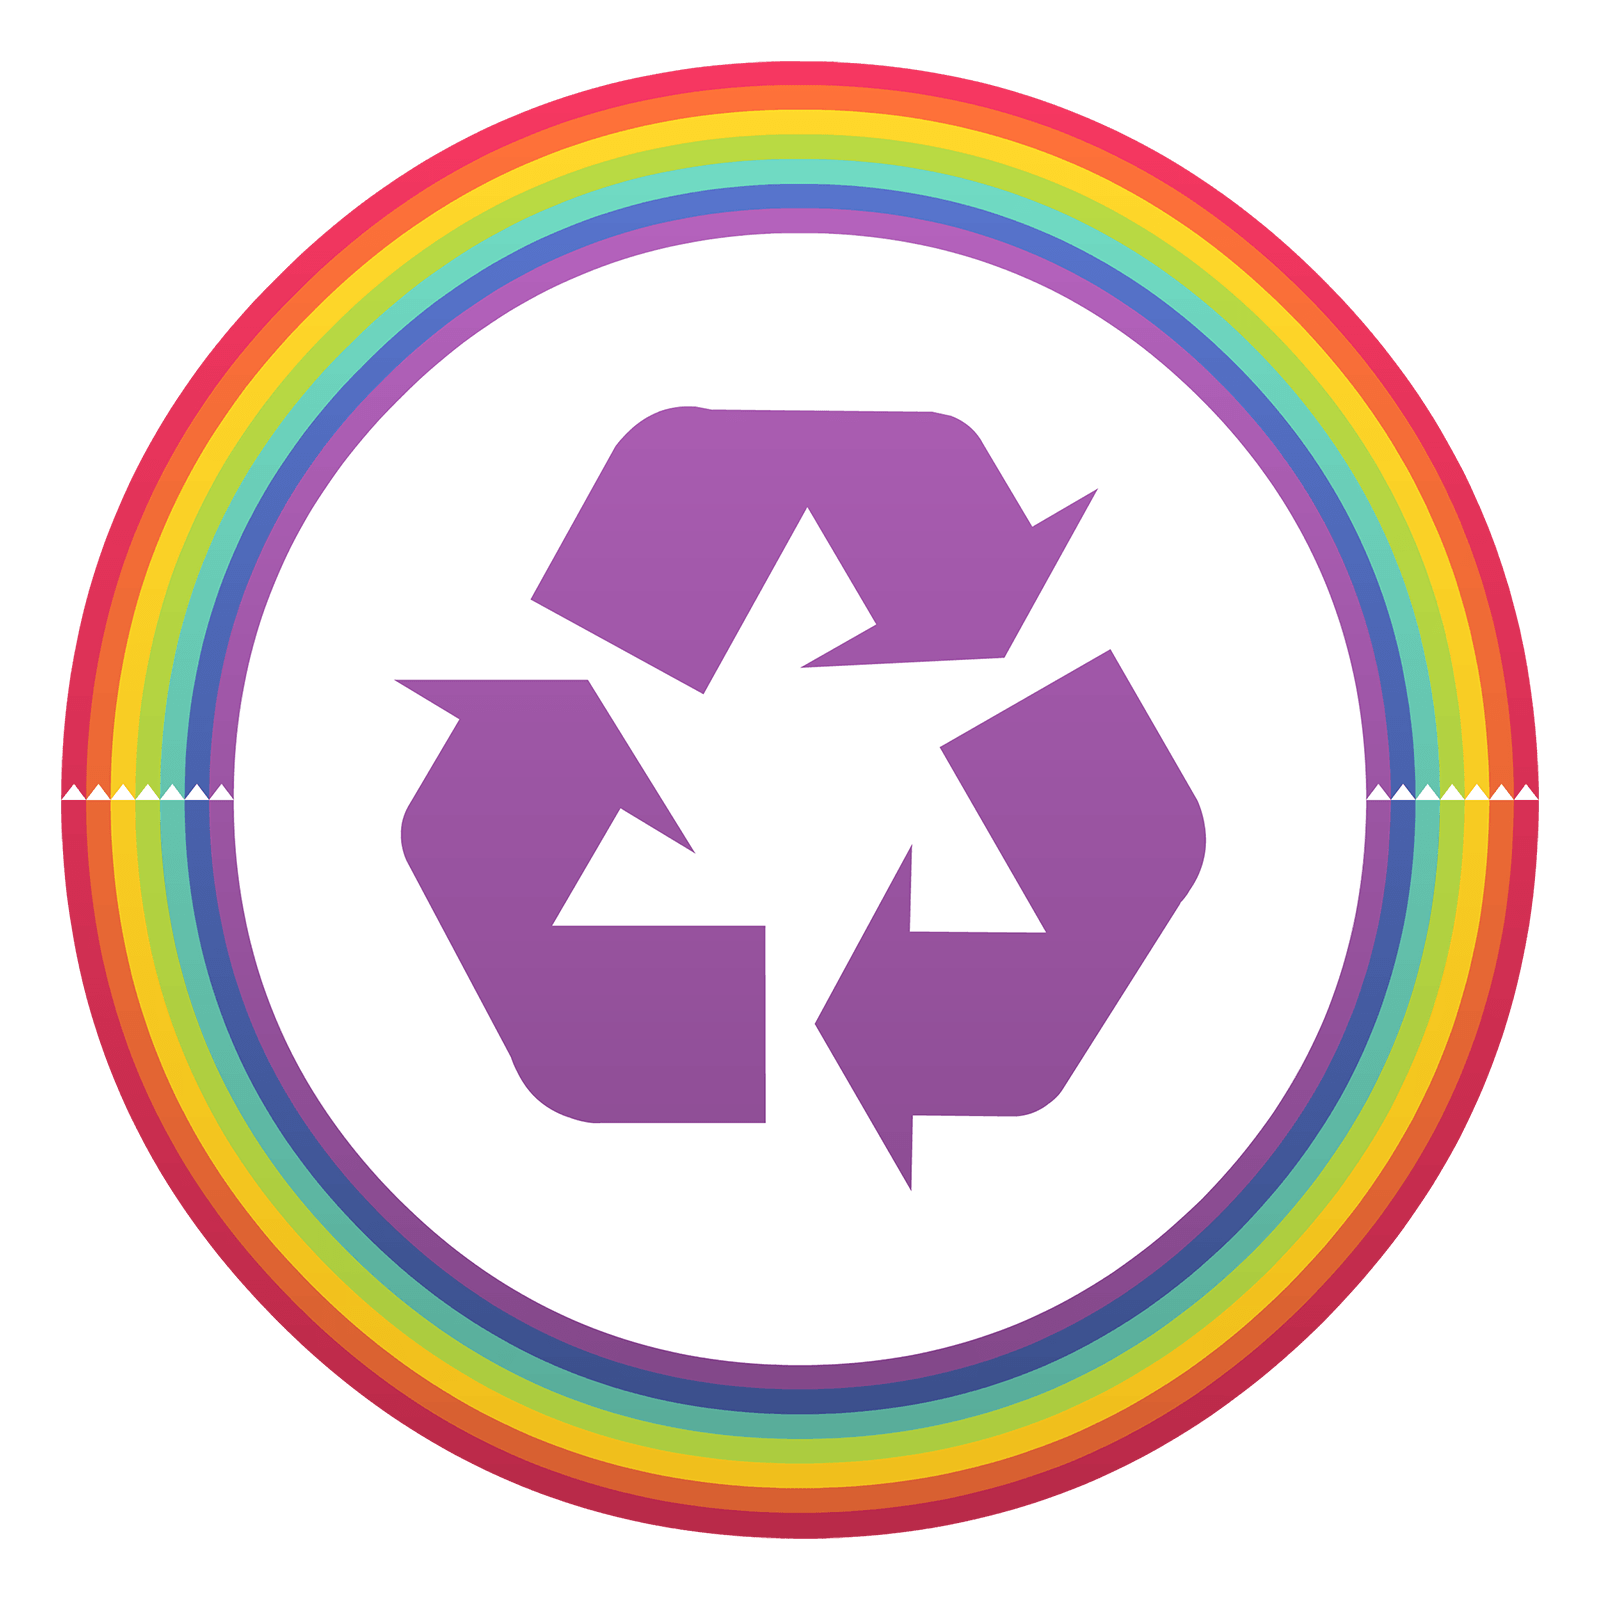 No Circle Logo - Download Zero Waste Symbol or Logo by Recycling.com